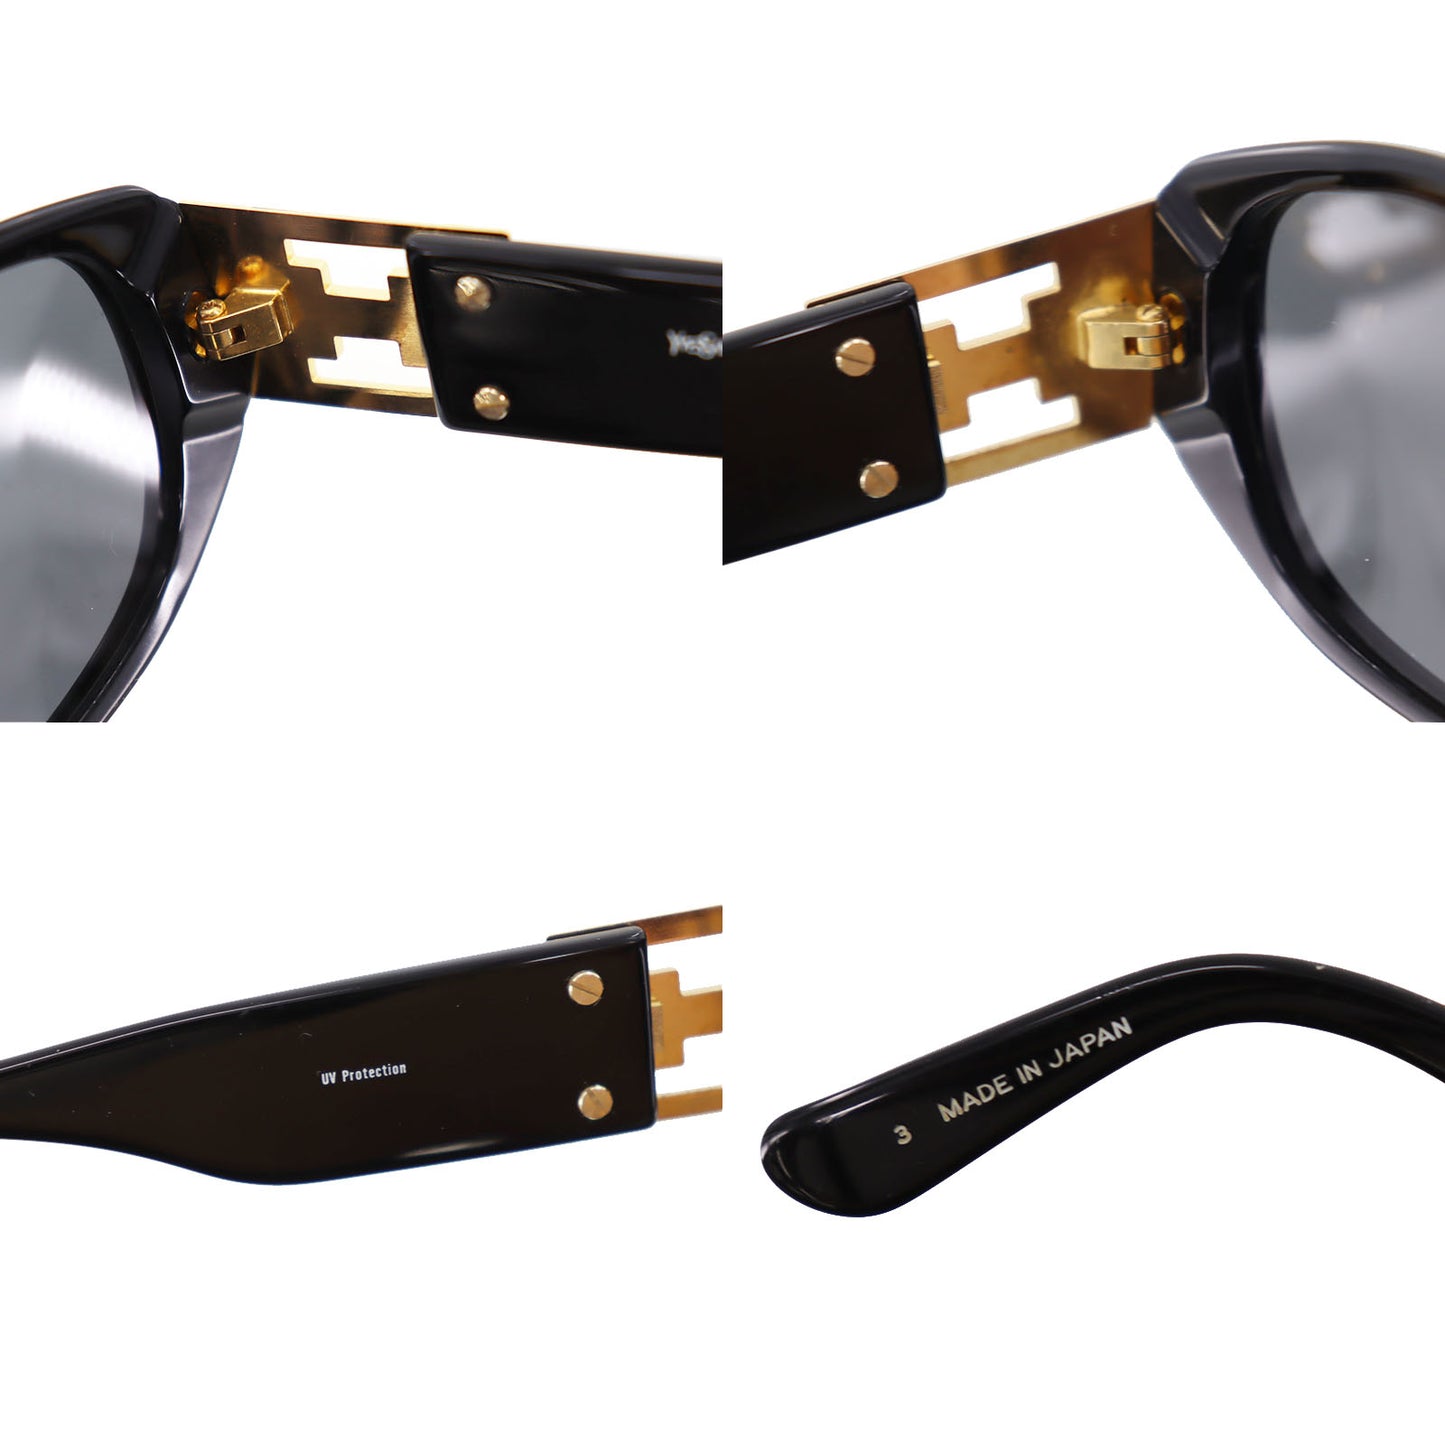 Yves Saint Laurent Sunglasses Black Gold Japan #CH136